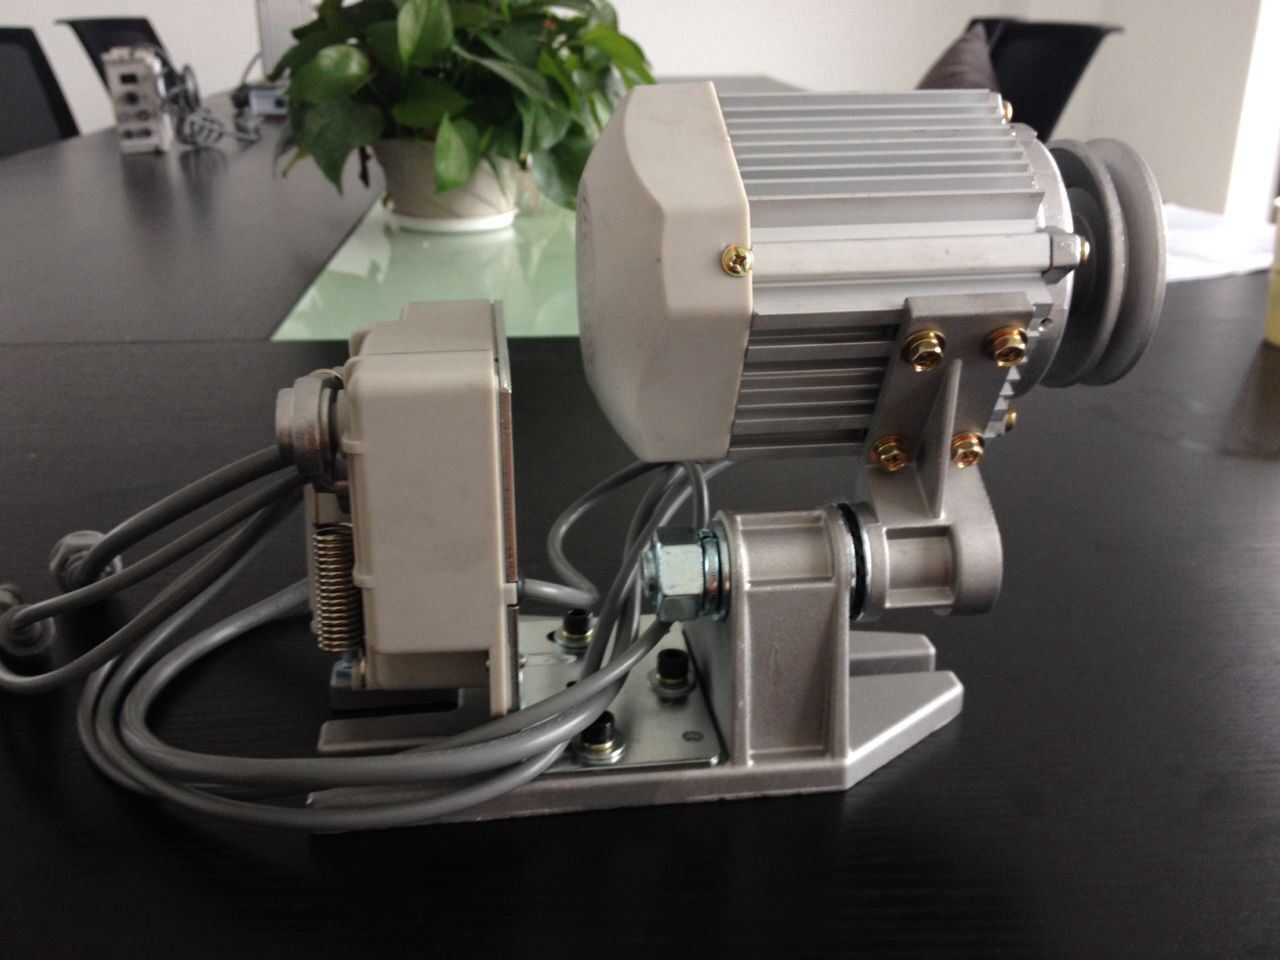 Wd-990jm Split Type Energy Saving Motor for Industrial Sewing Machine